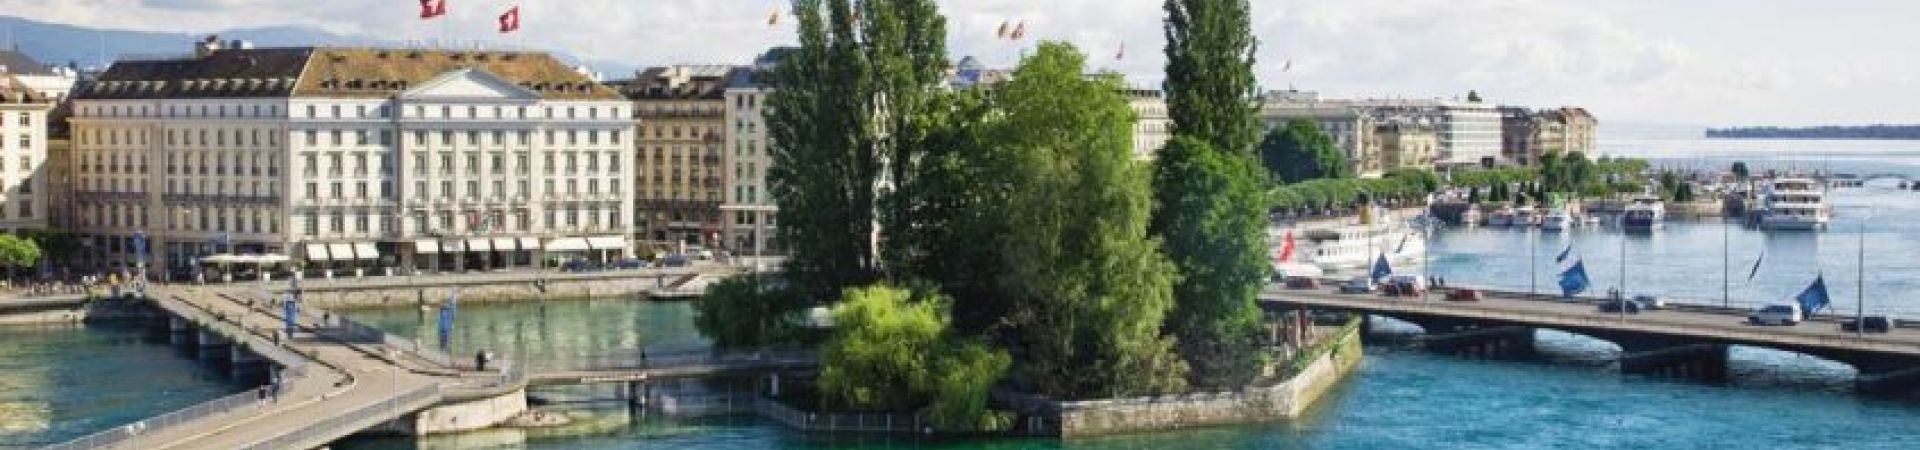 Four Seasons Hotel des Bergues, Geneva